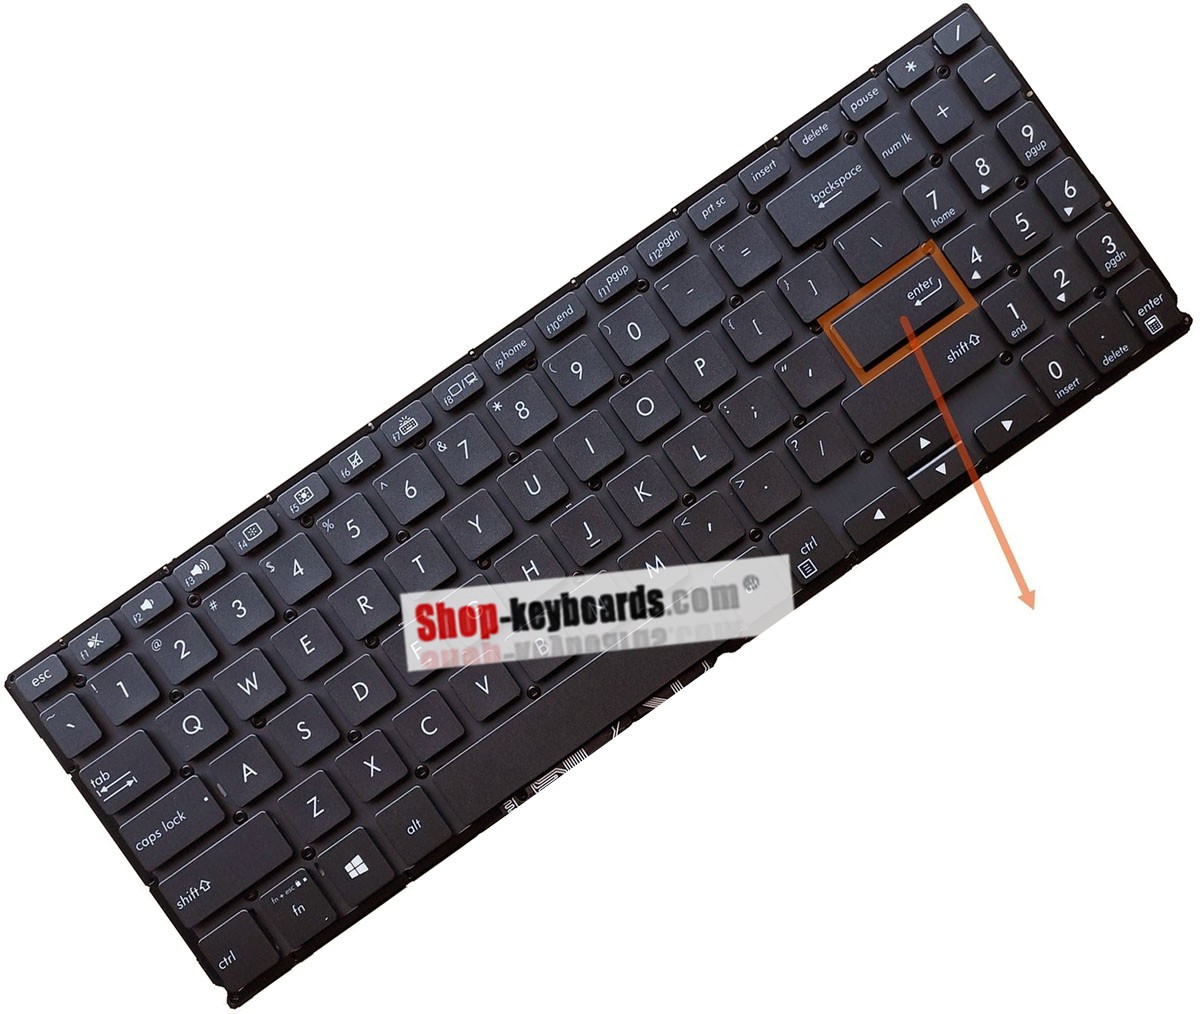 Asus 0KNB0-563BJP00  Keyboard replacement